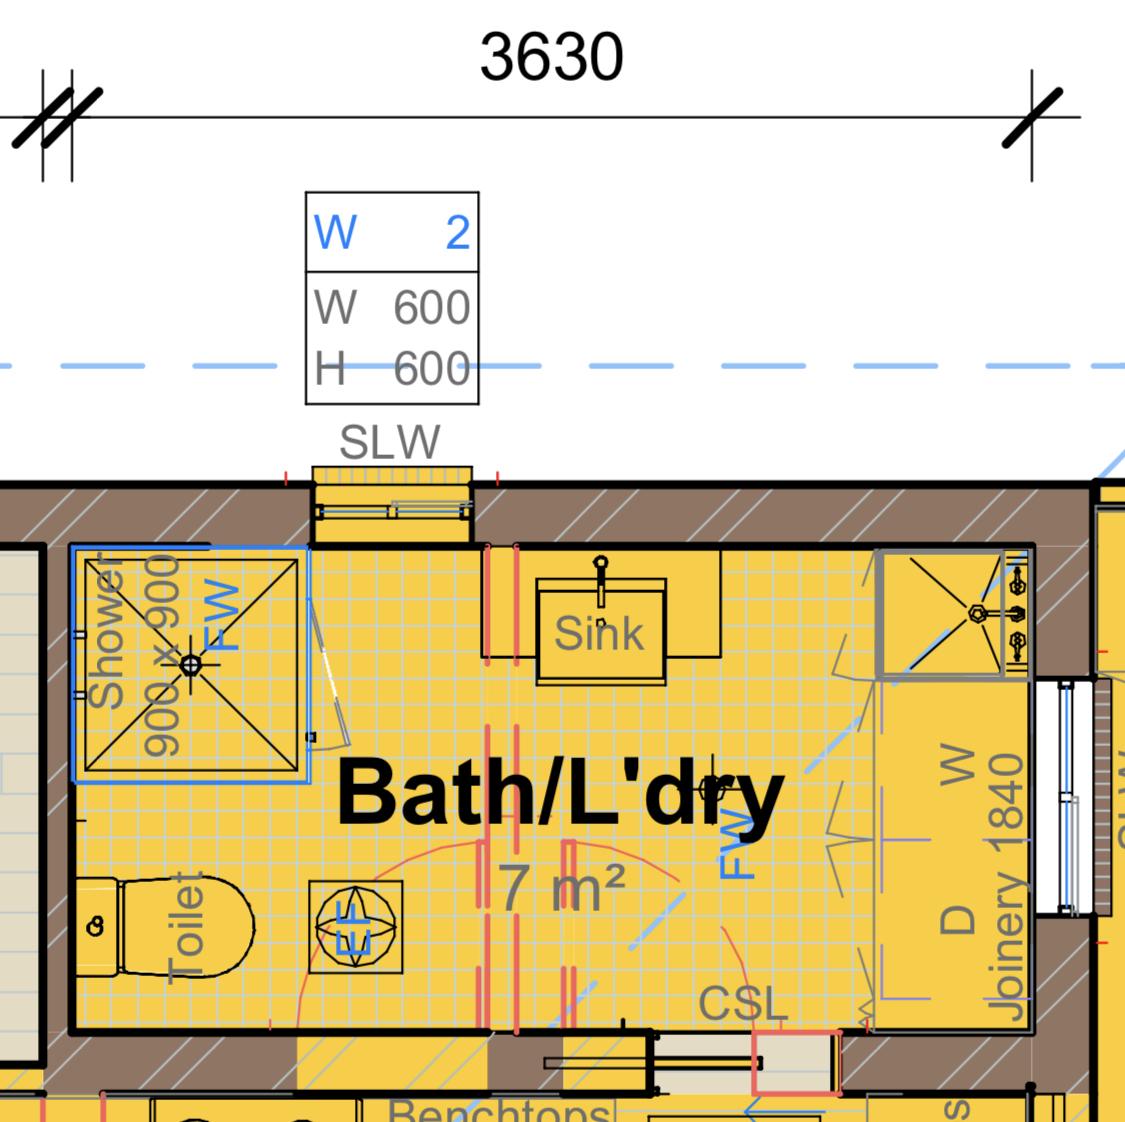 New laundry/bathroom layout